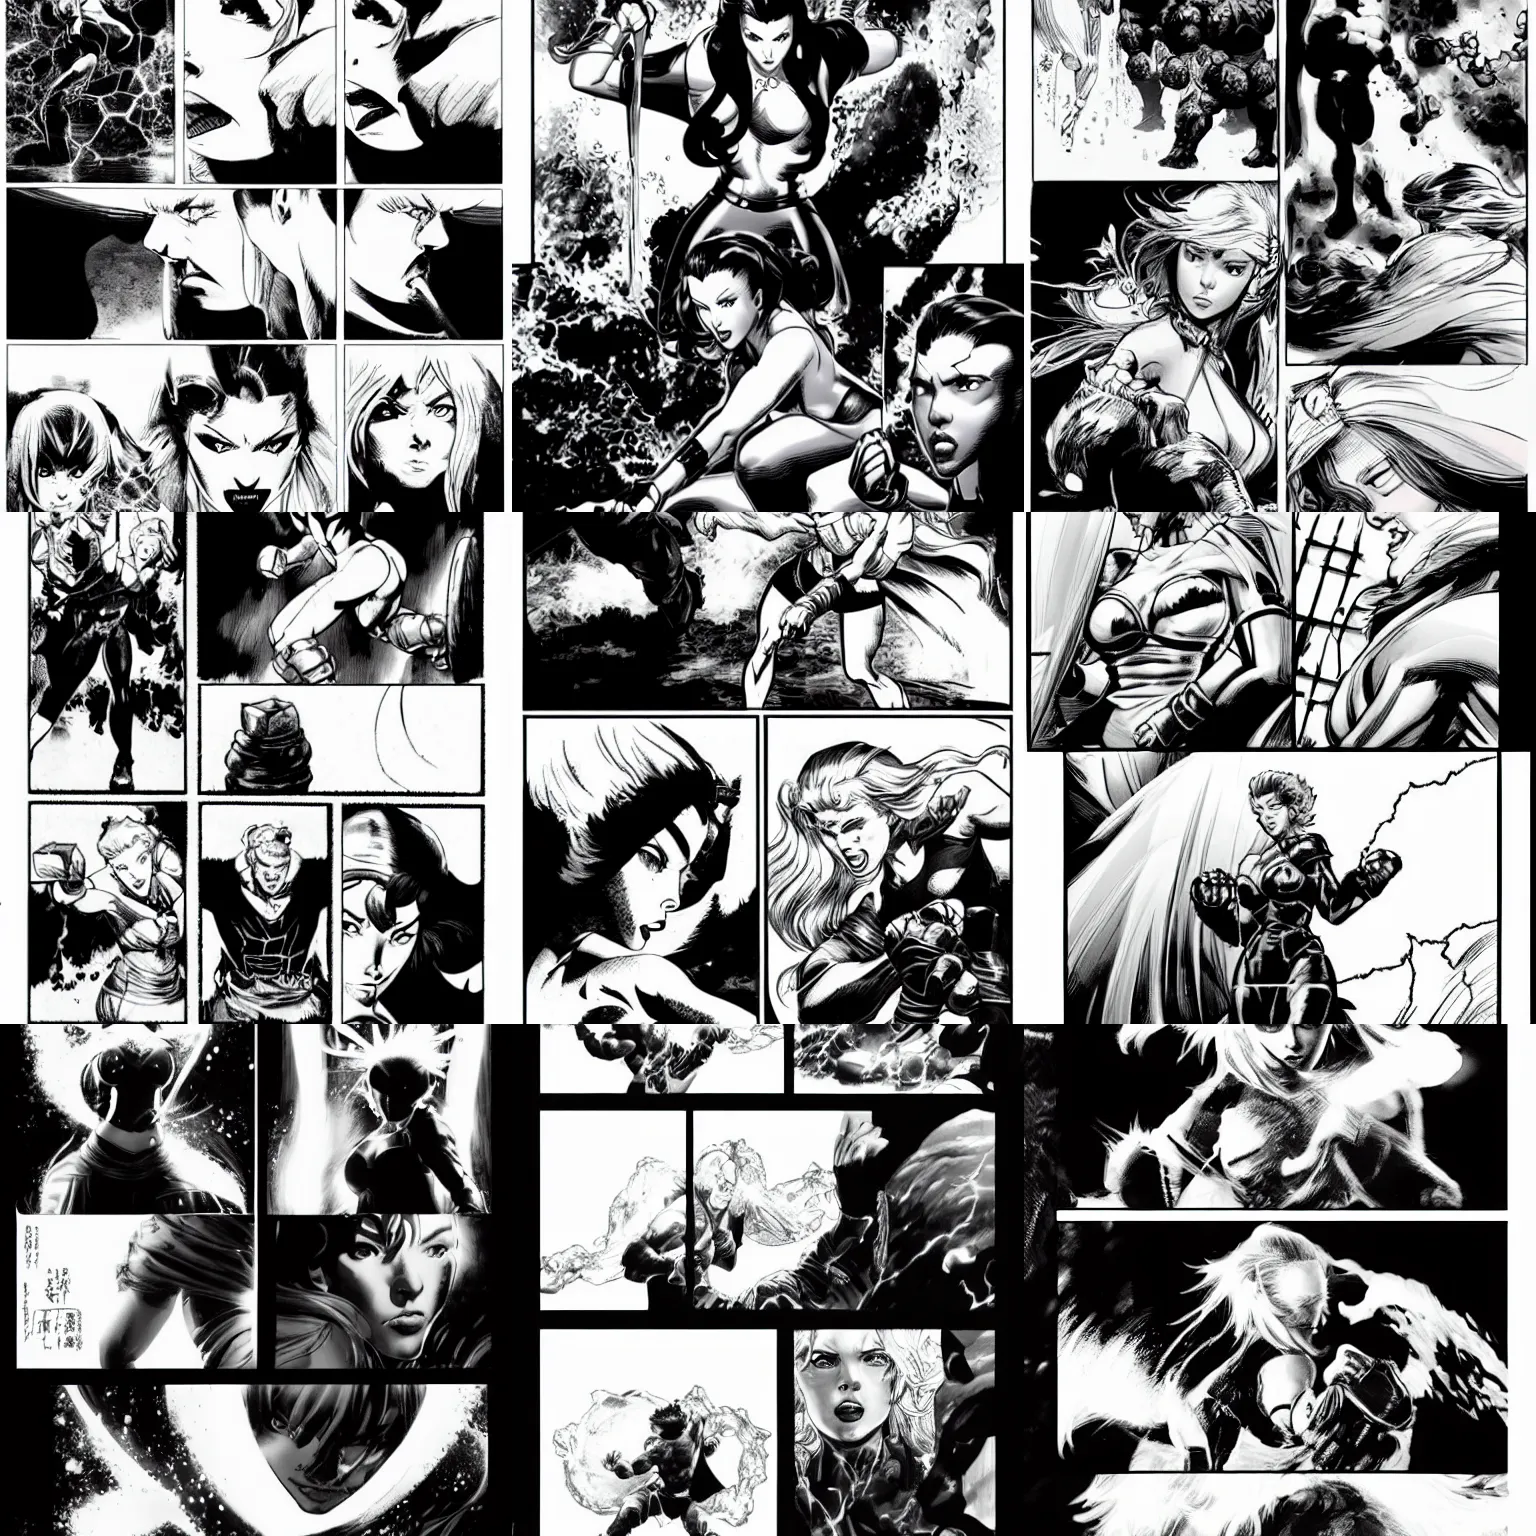 Prompt: symmetrical scarlett johansson, punching through ice blocks! scenes by david finch and frank frazetta, black and white, afro samurai manga style